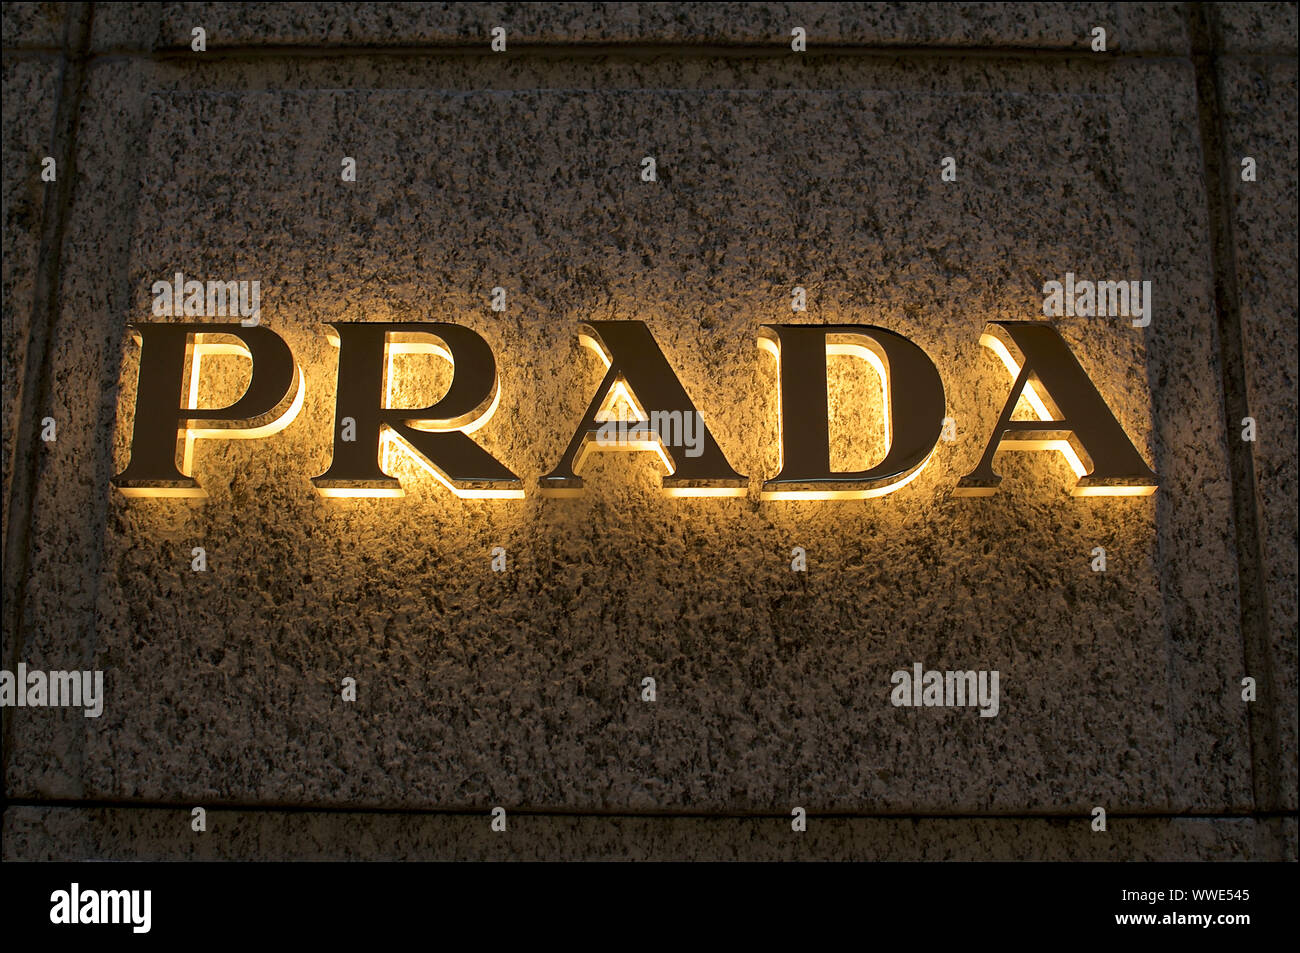 Prada logo hi-res stock photography and images - Alamy